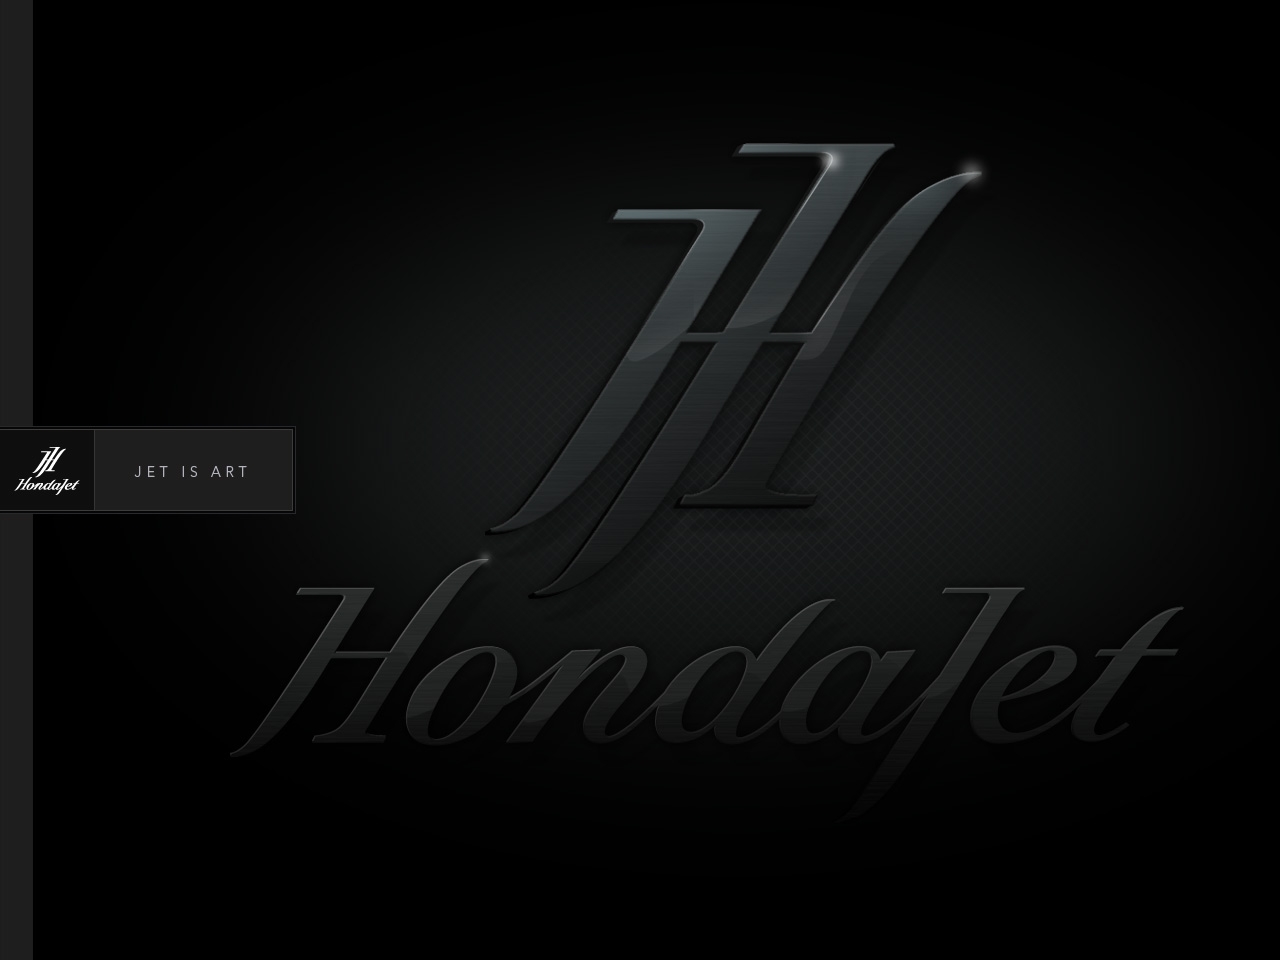 Honda Logo Wallpaper HD In Logos Imageci